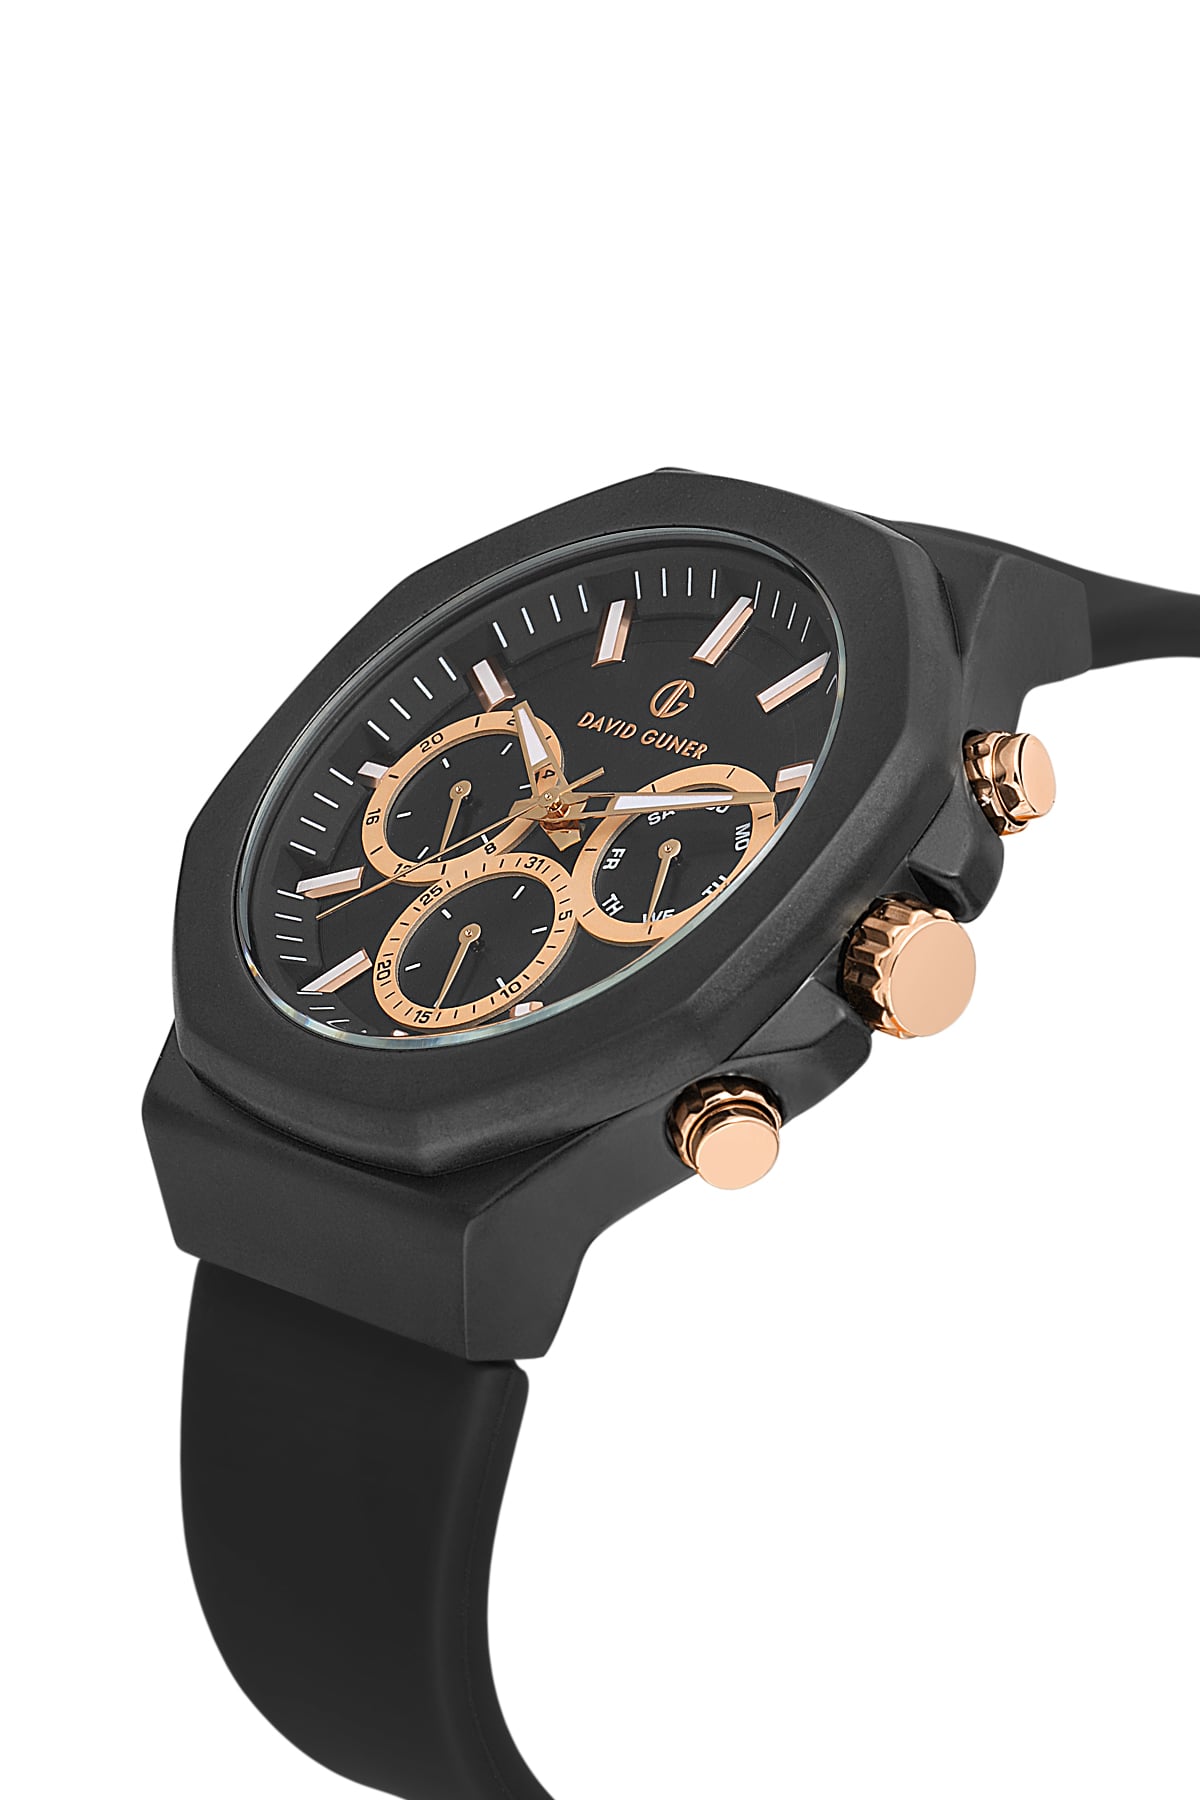 DAVID GUNER Black Coated Multifunctional Men's Wristwatch with Black Silicone Strap